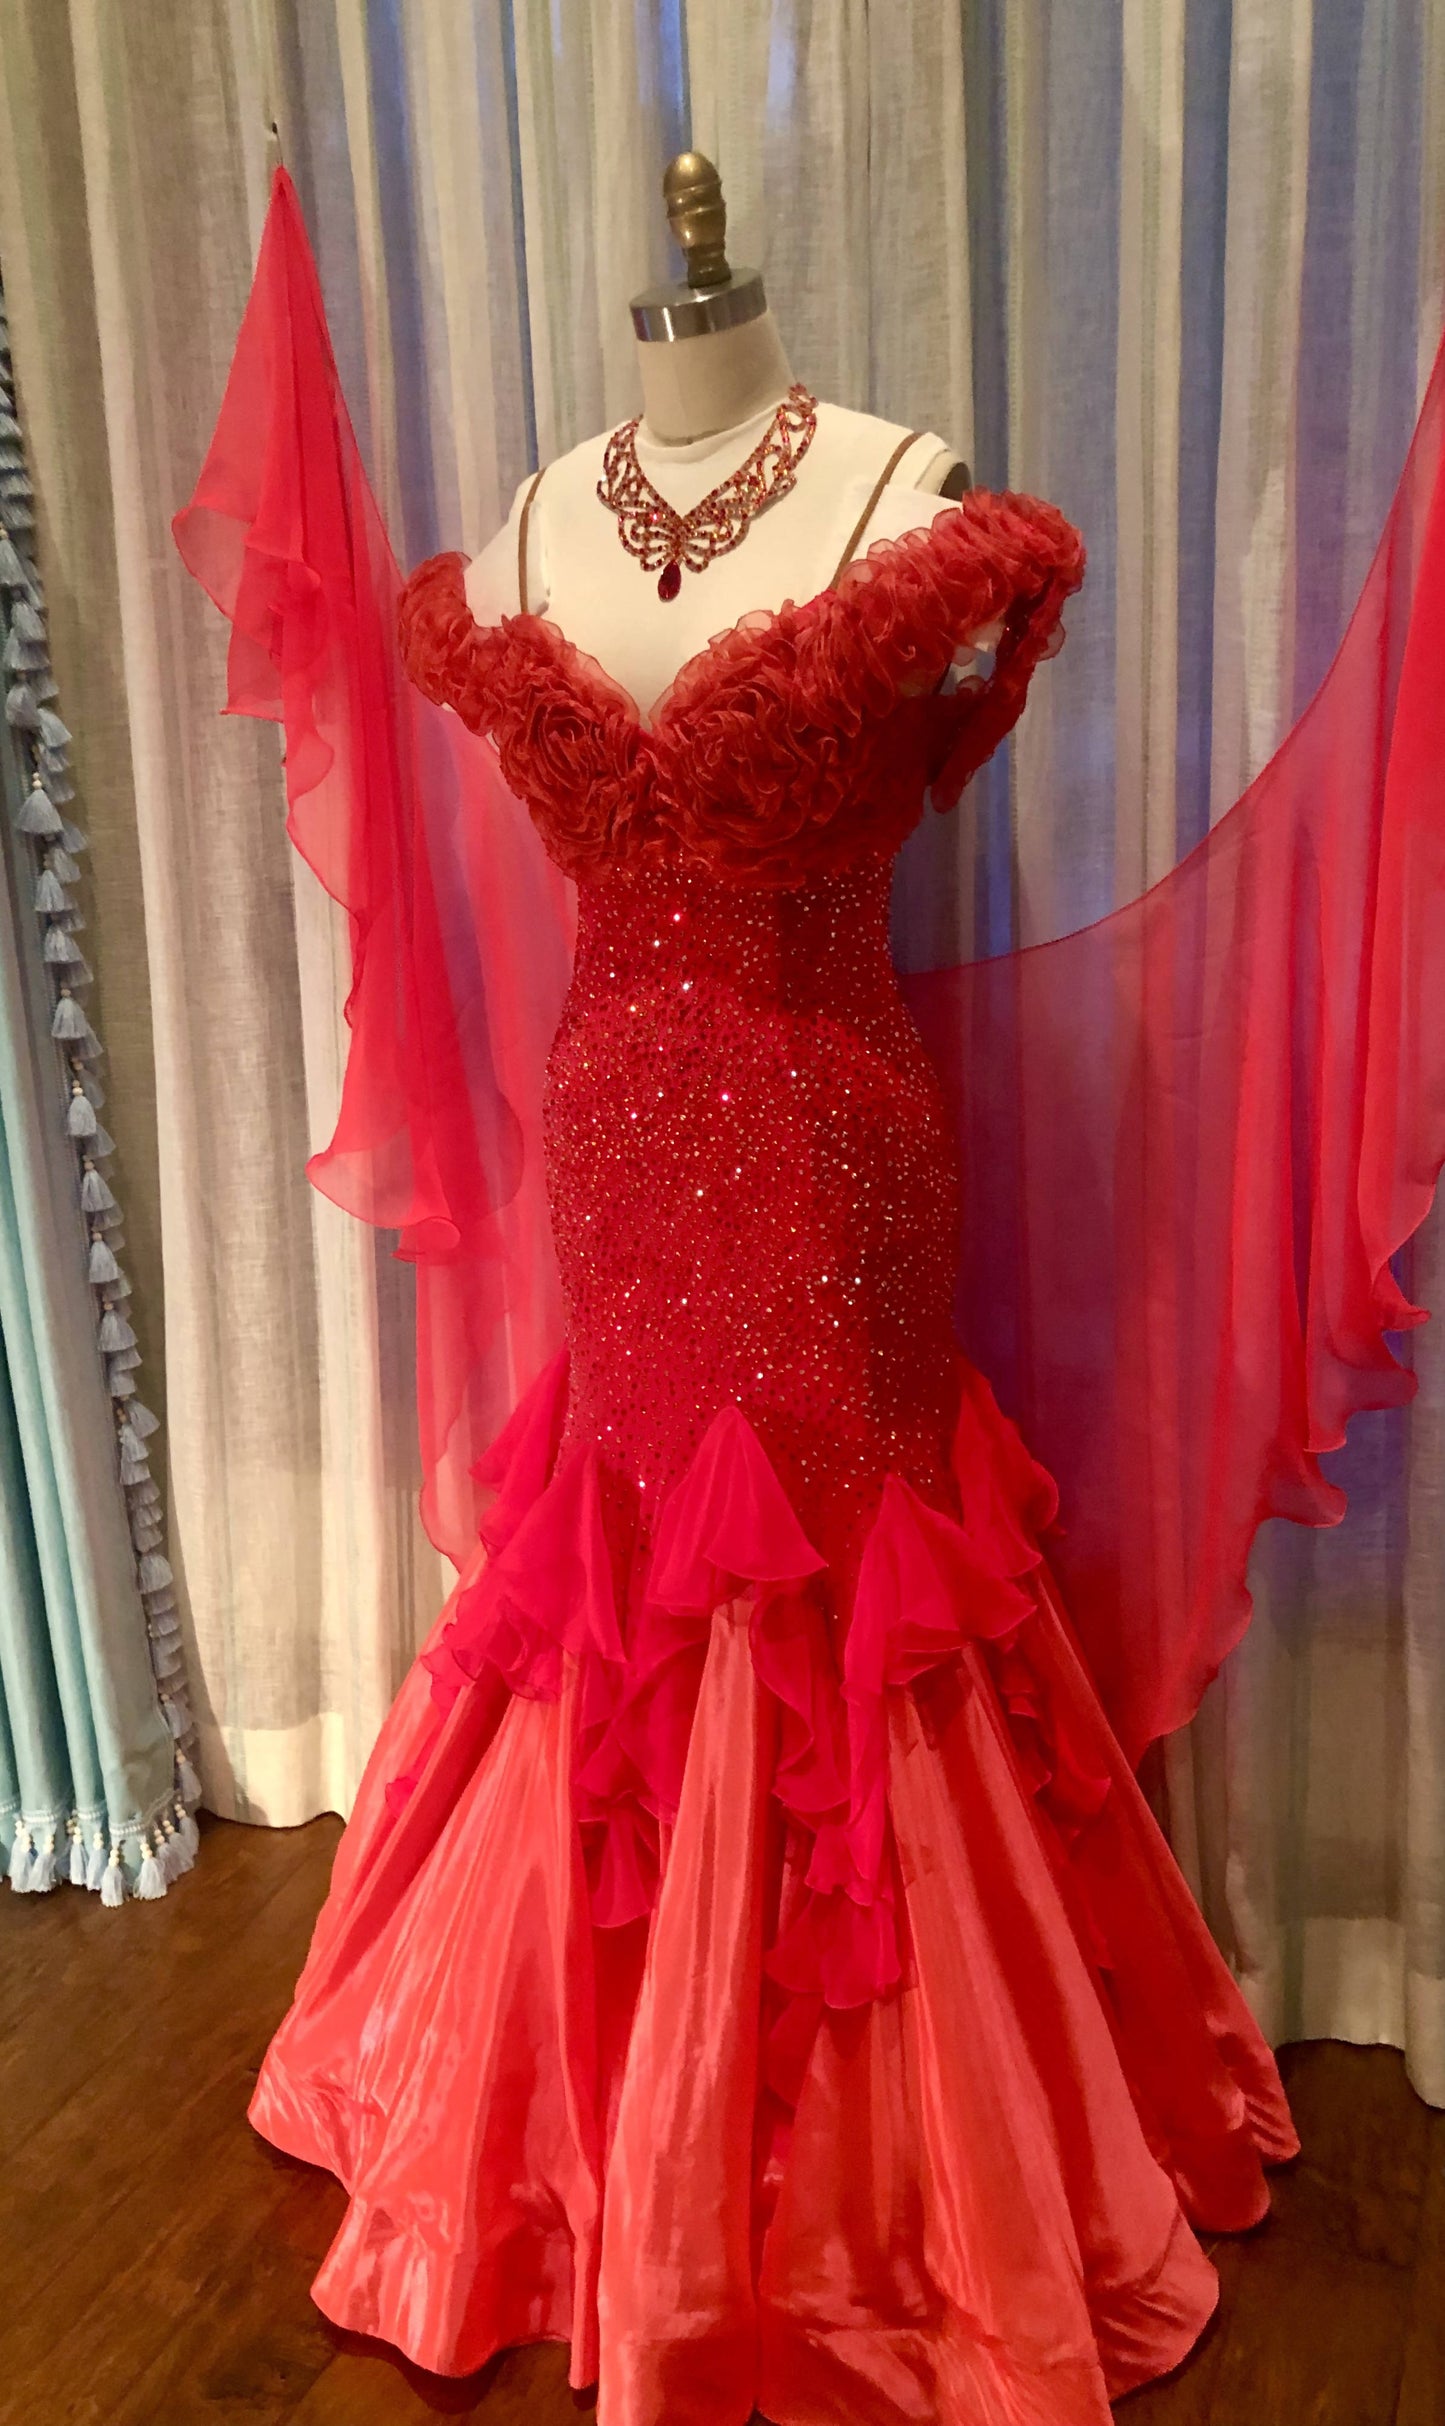 Sunglow Red Ballroom Dress